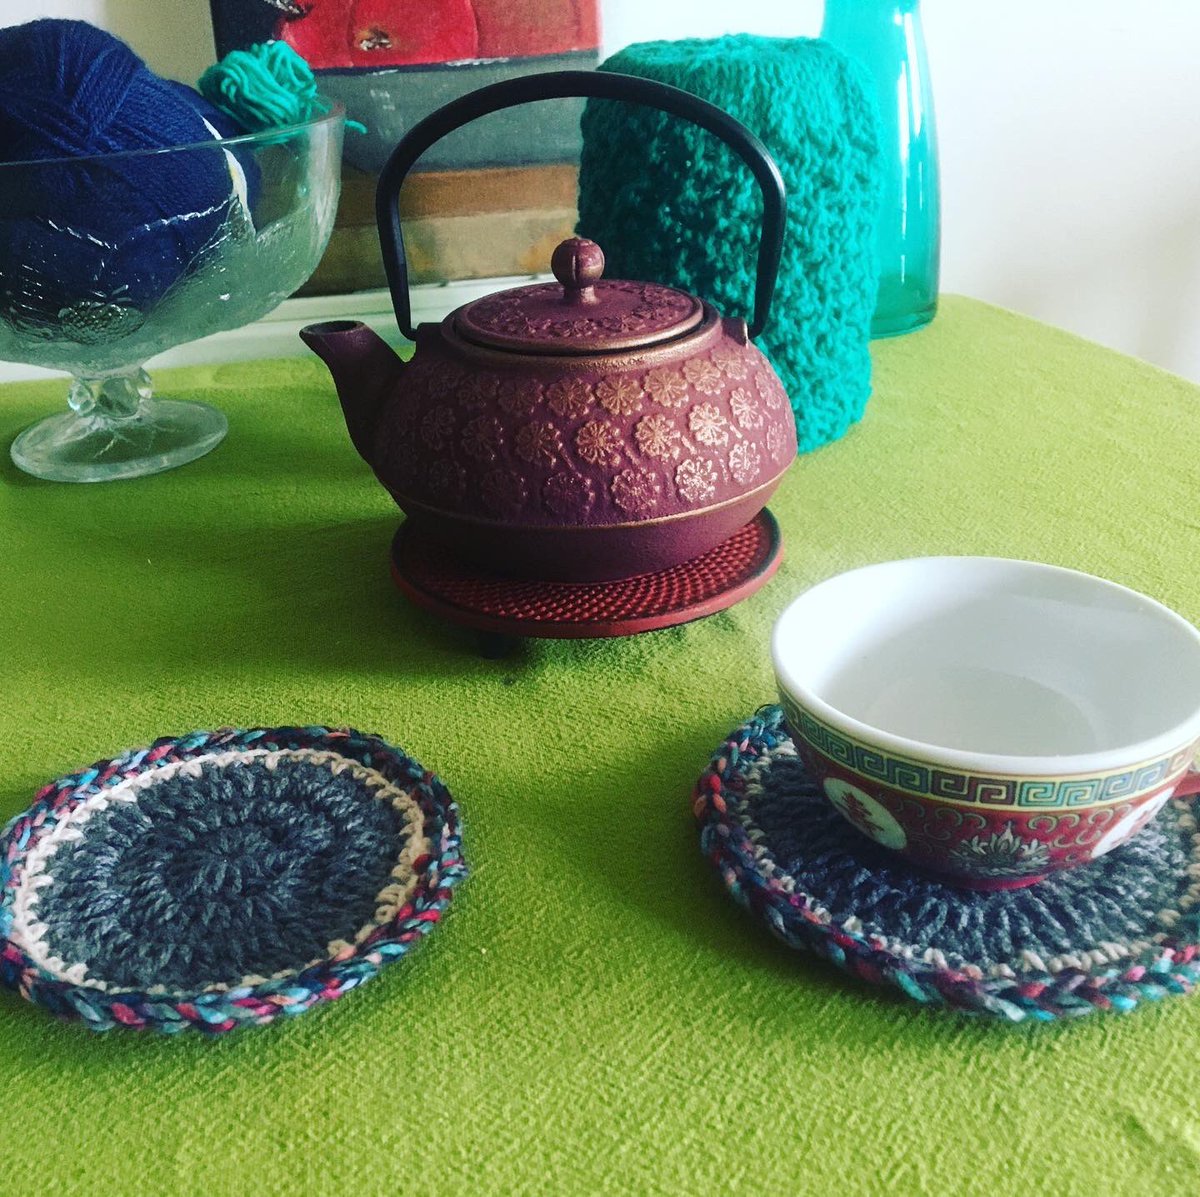 #TableCoasters

#Crochet #yarnaddict #yarnspirations #yarnaddiction #yarncolours #knittersofinstagram #instacrochet #crochetlove #crocheteers 
#shareyourcrochet #knitspiration #knitting_inspiration #woolweek